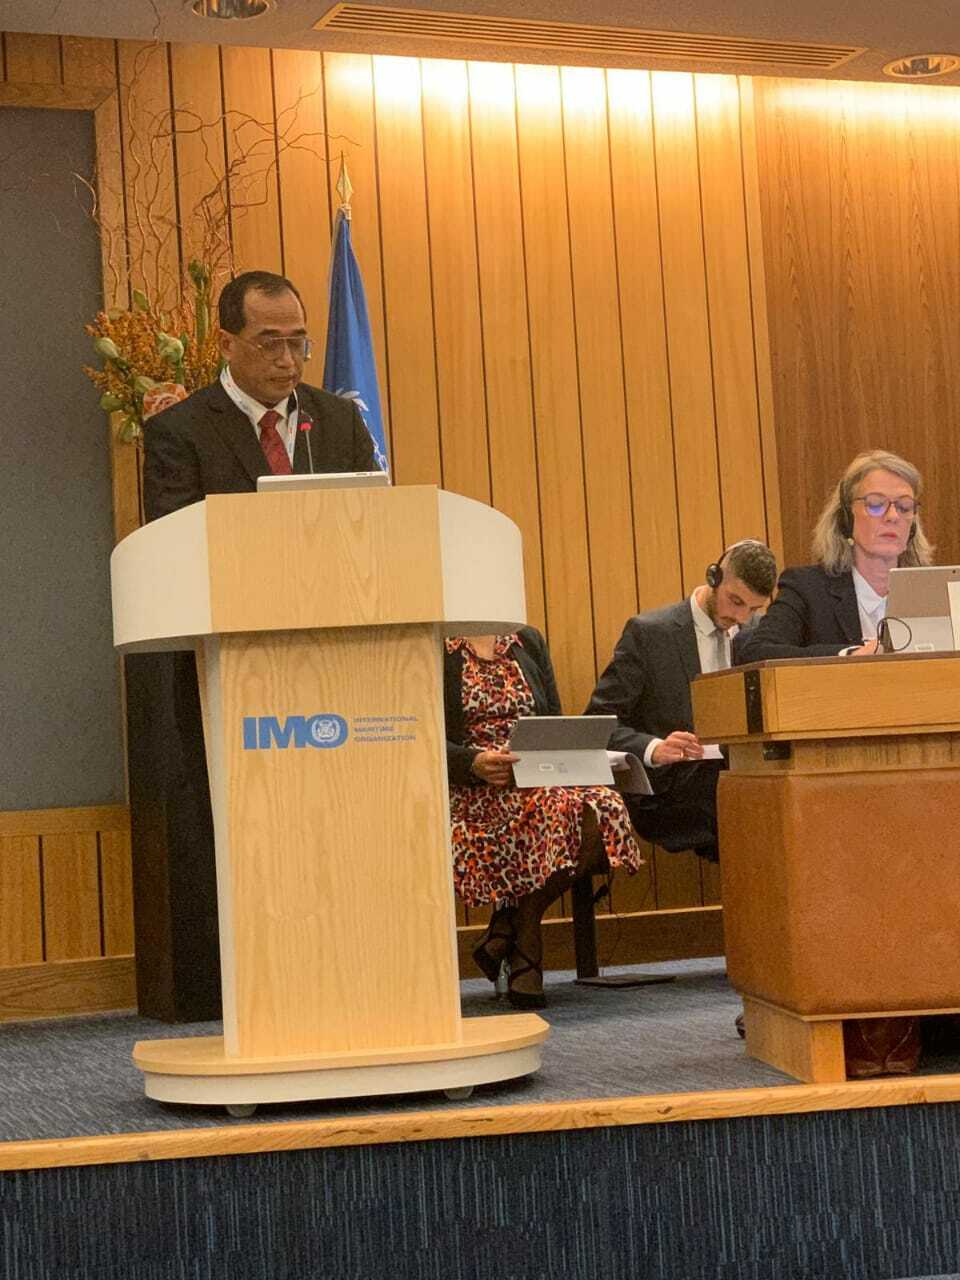 Transportation Minister Budi Karya Sumadi speaks at the 31st plenary meeting of the International Maritime Organization (IMO) in London on Tuesday. (Photo courtesy of the Transportation Ministry)